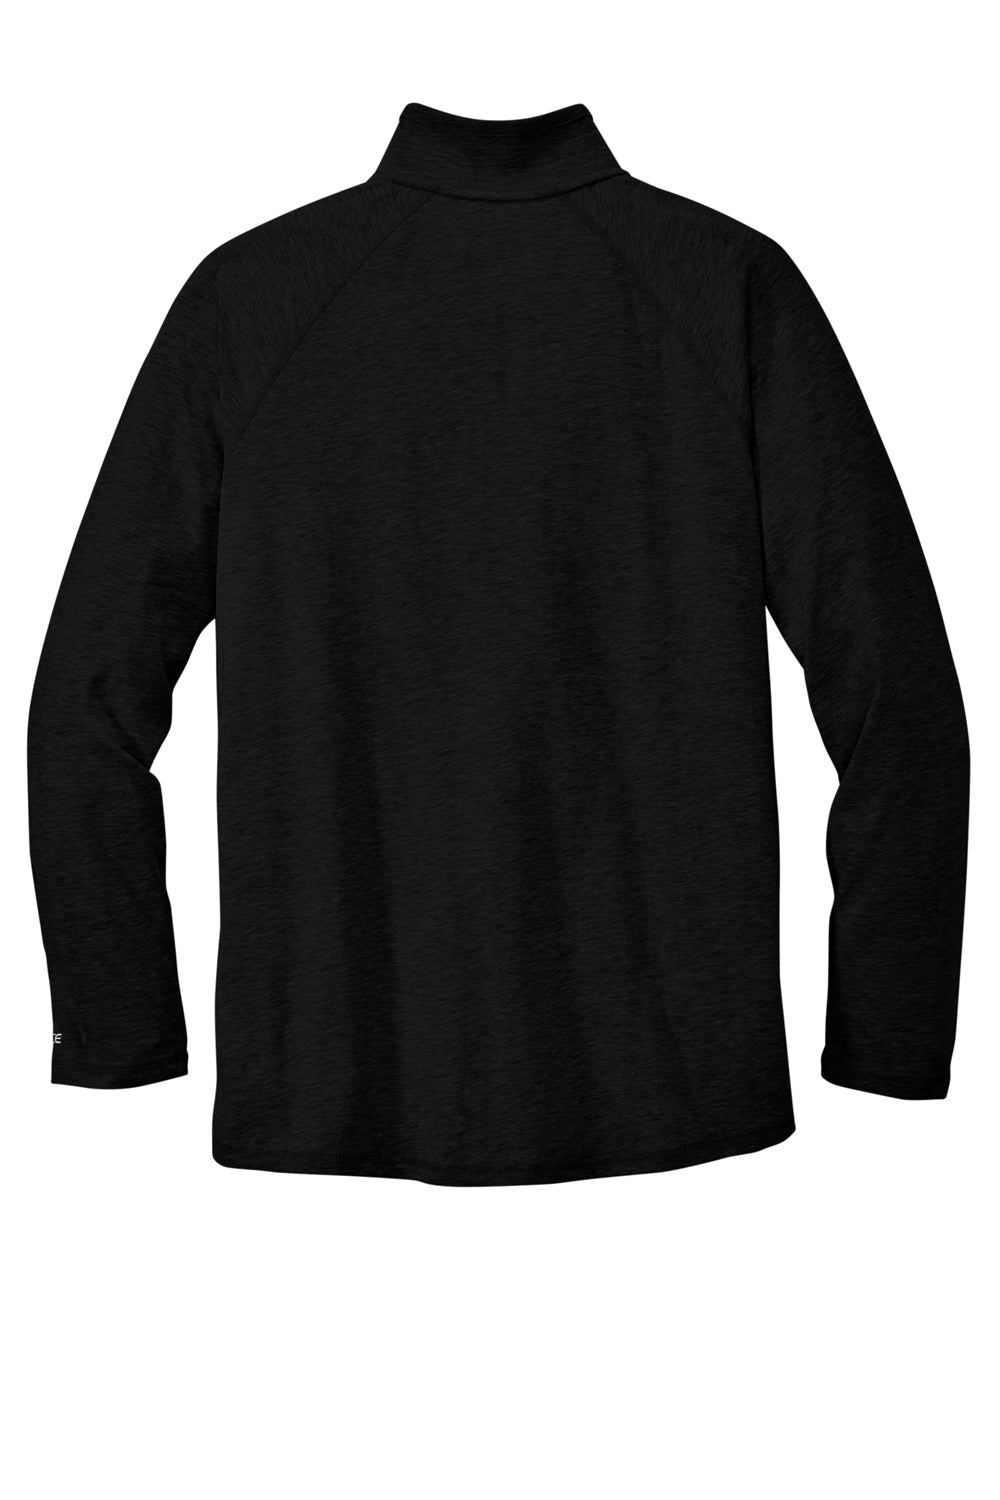 Carhartt CT104255 Mens Force Moisture Wicking 1/4 Zip Long Sleeve T-Shirt w/ Pocket Black Flat Back